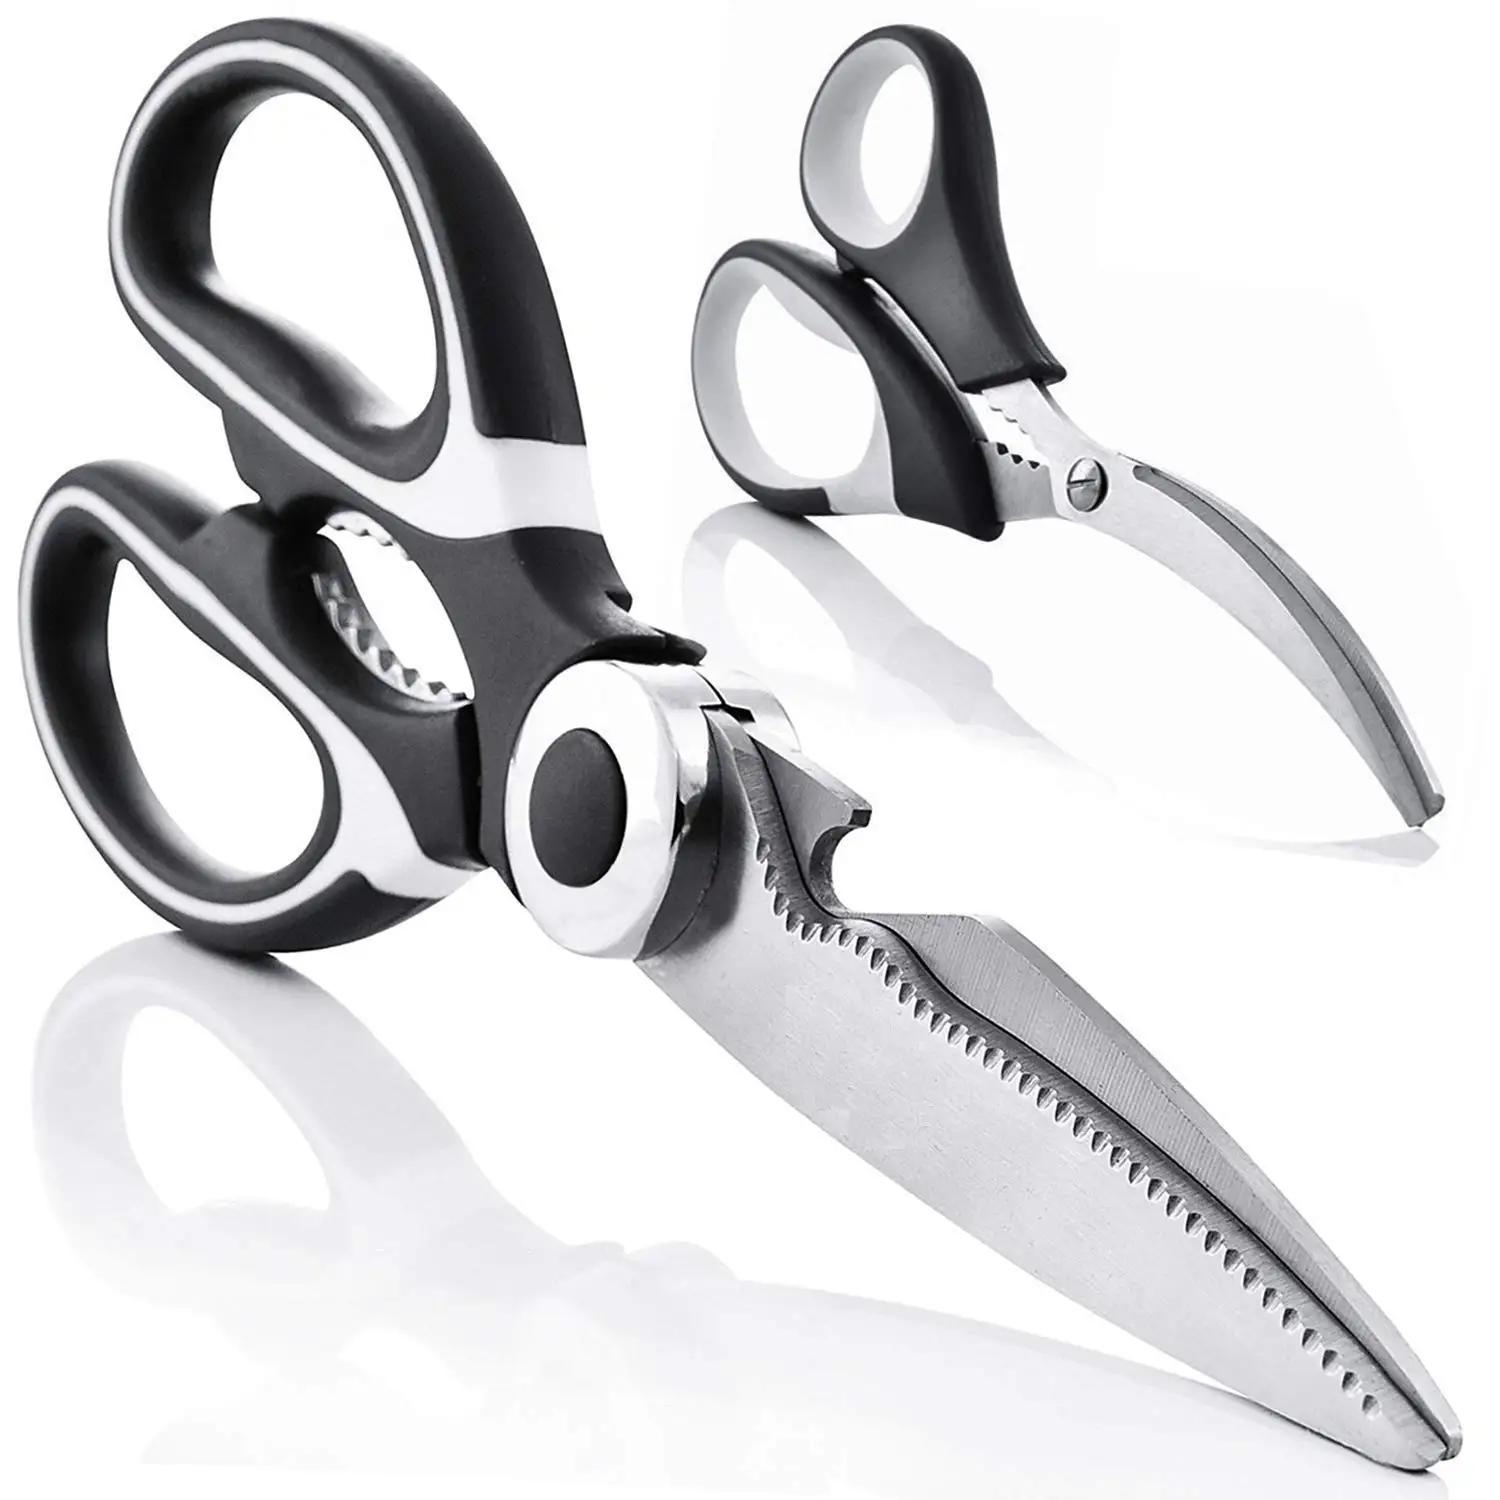 
High quality multi-purpose kitchen scissors seafood scissor set 